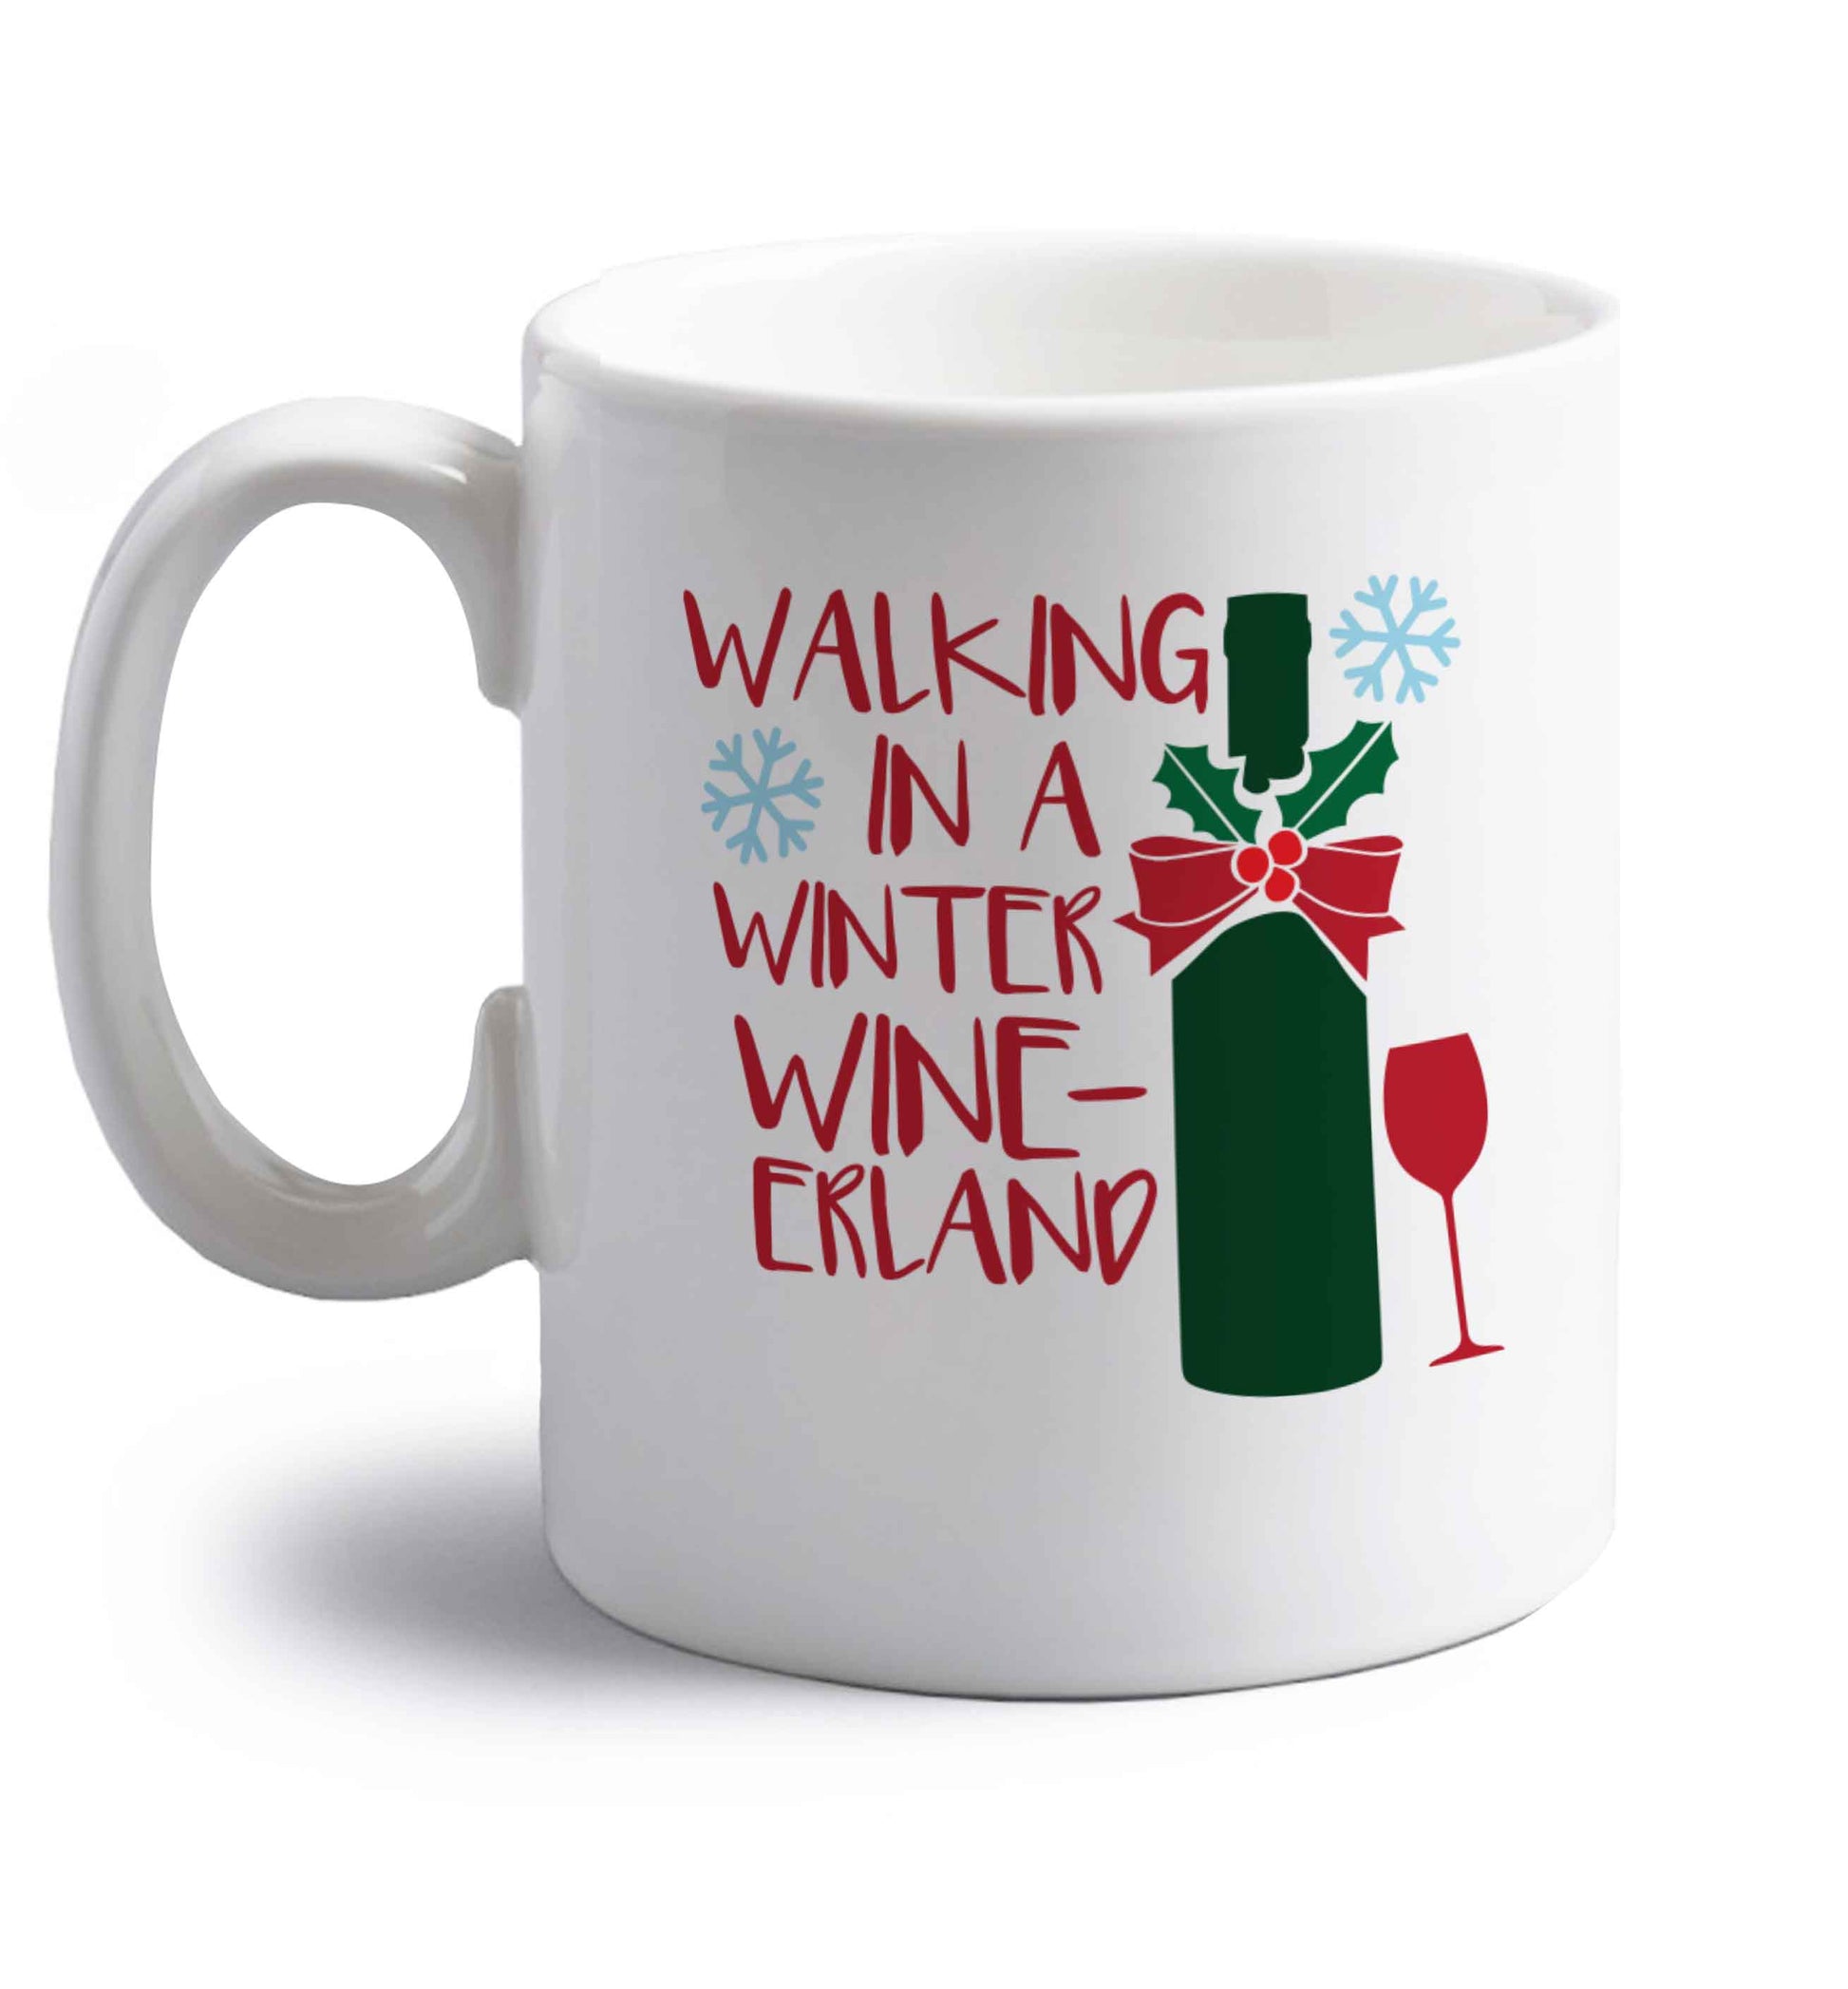 Walking in a wine-derwonderland right handed white ceramic mug 